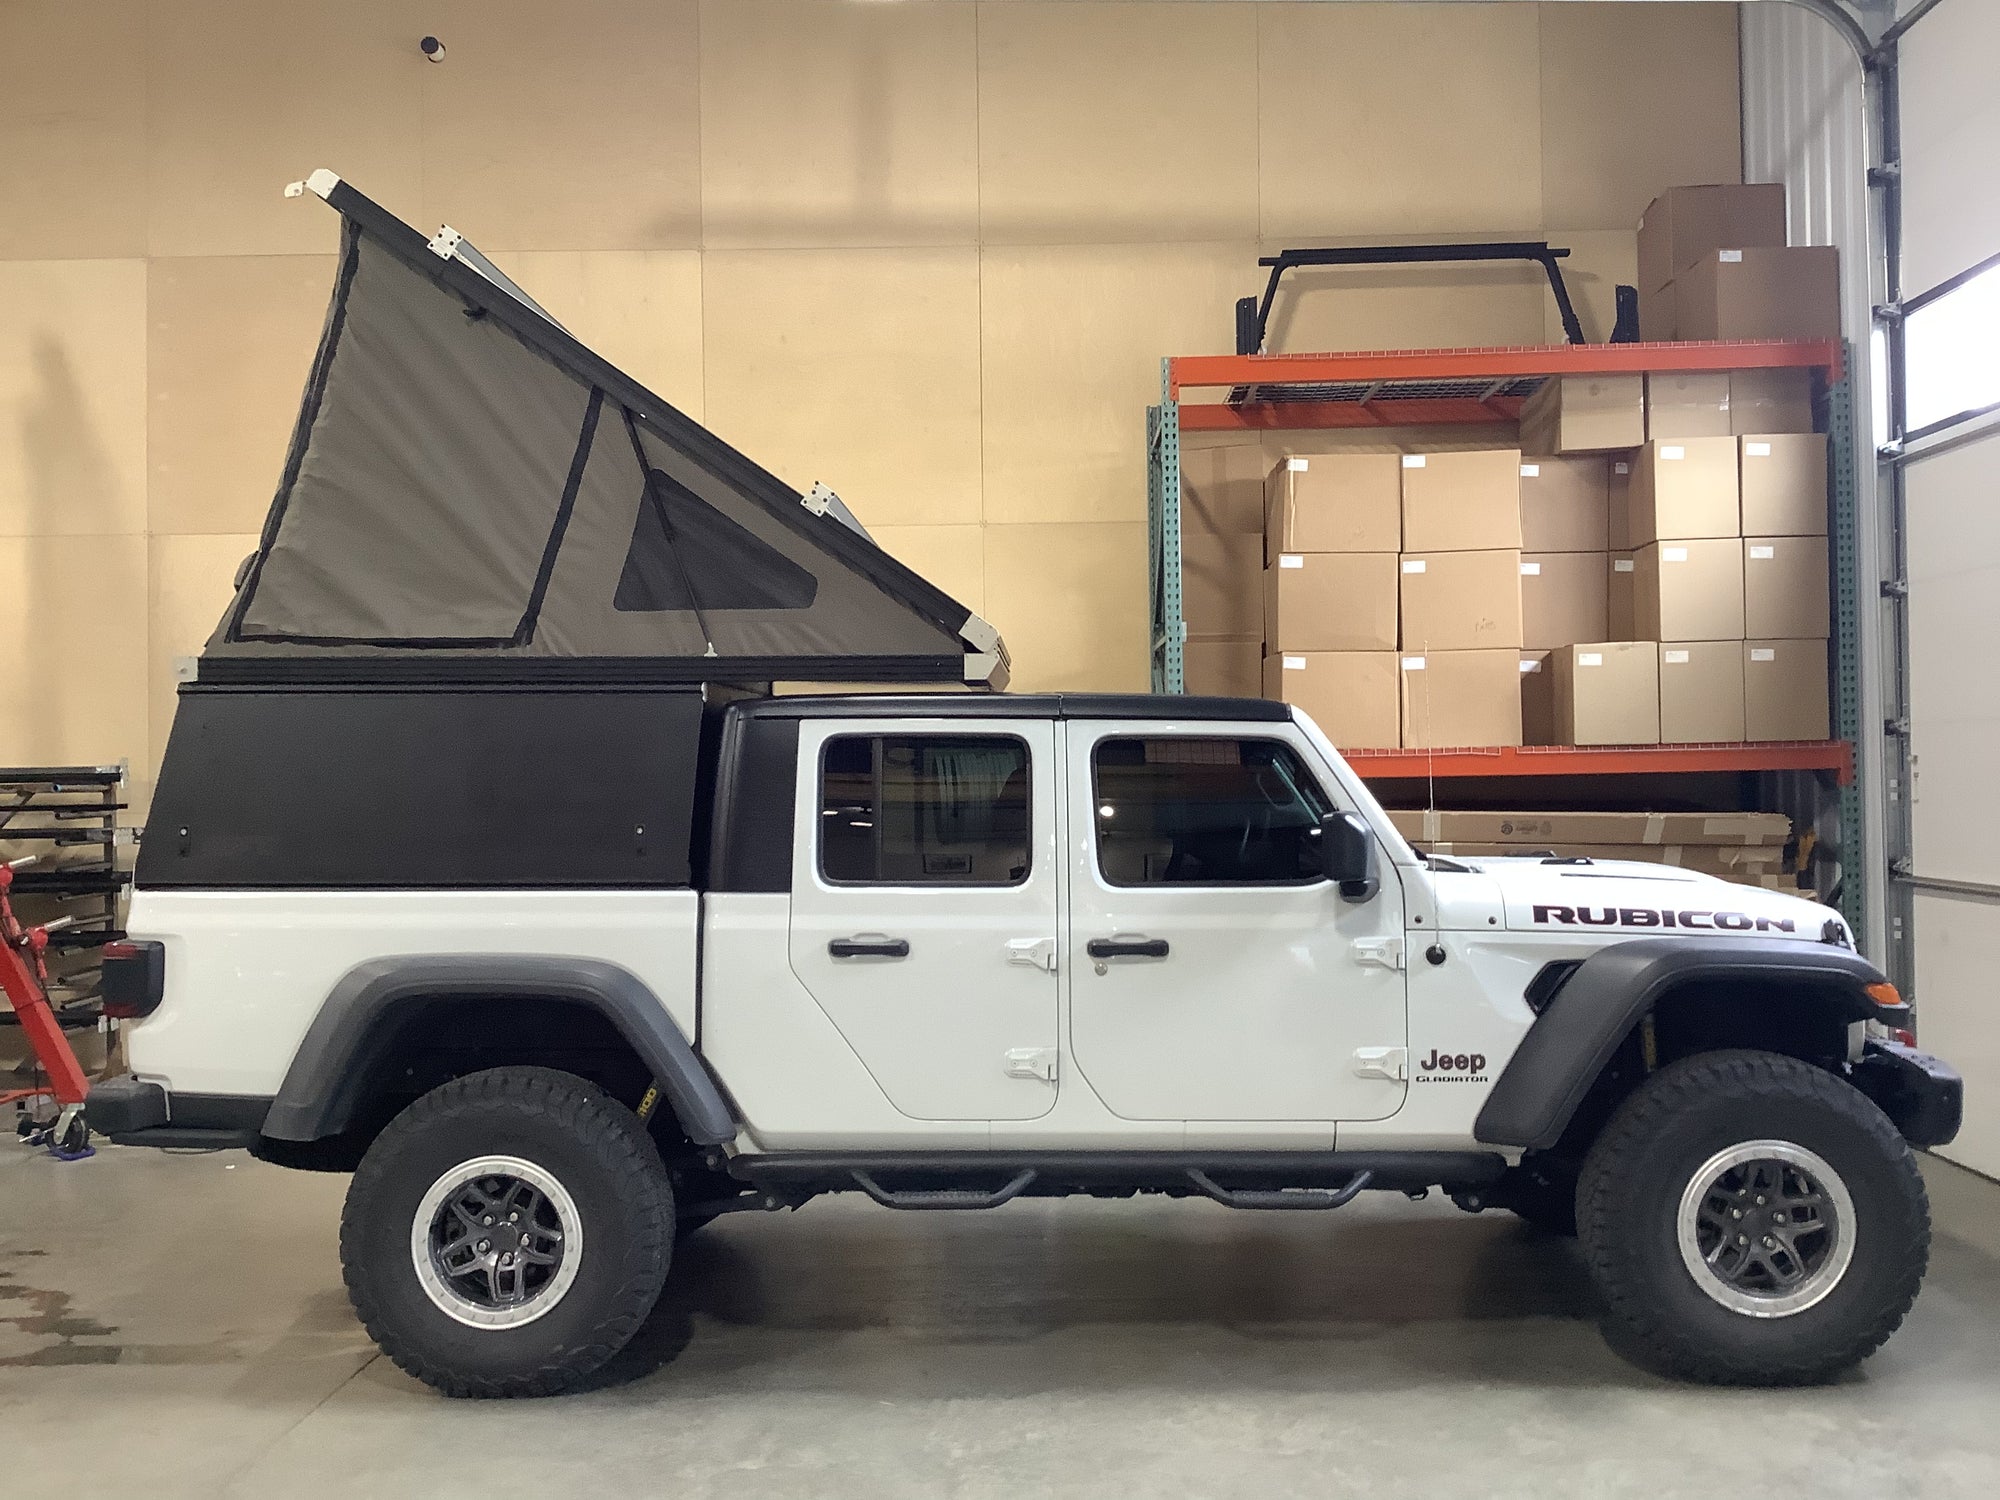 2021 Jeep Gladiator Camper - Build #3696